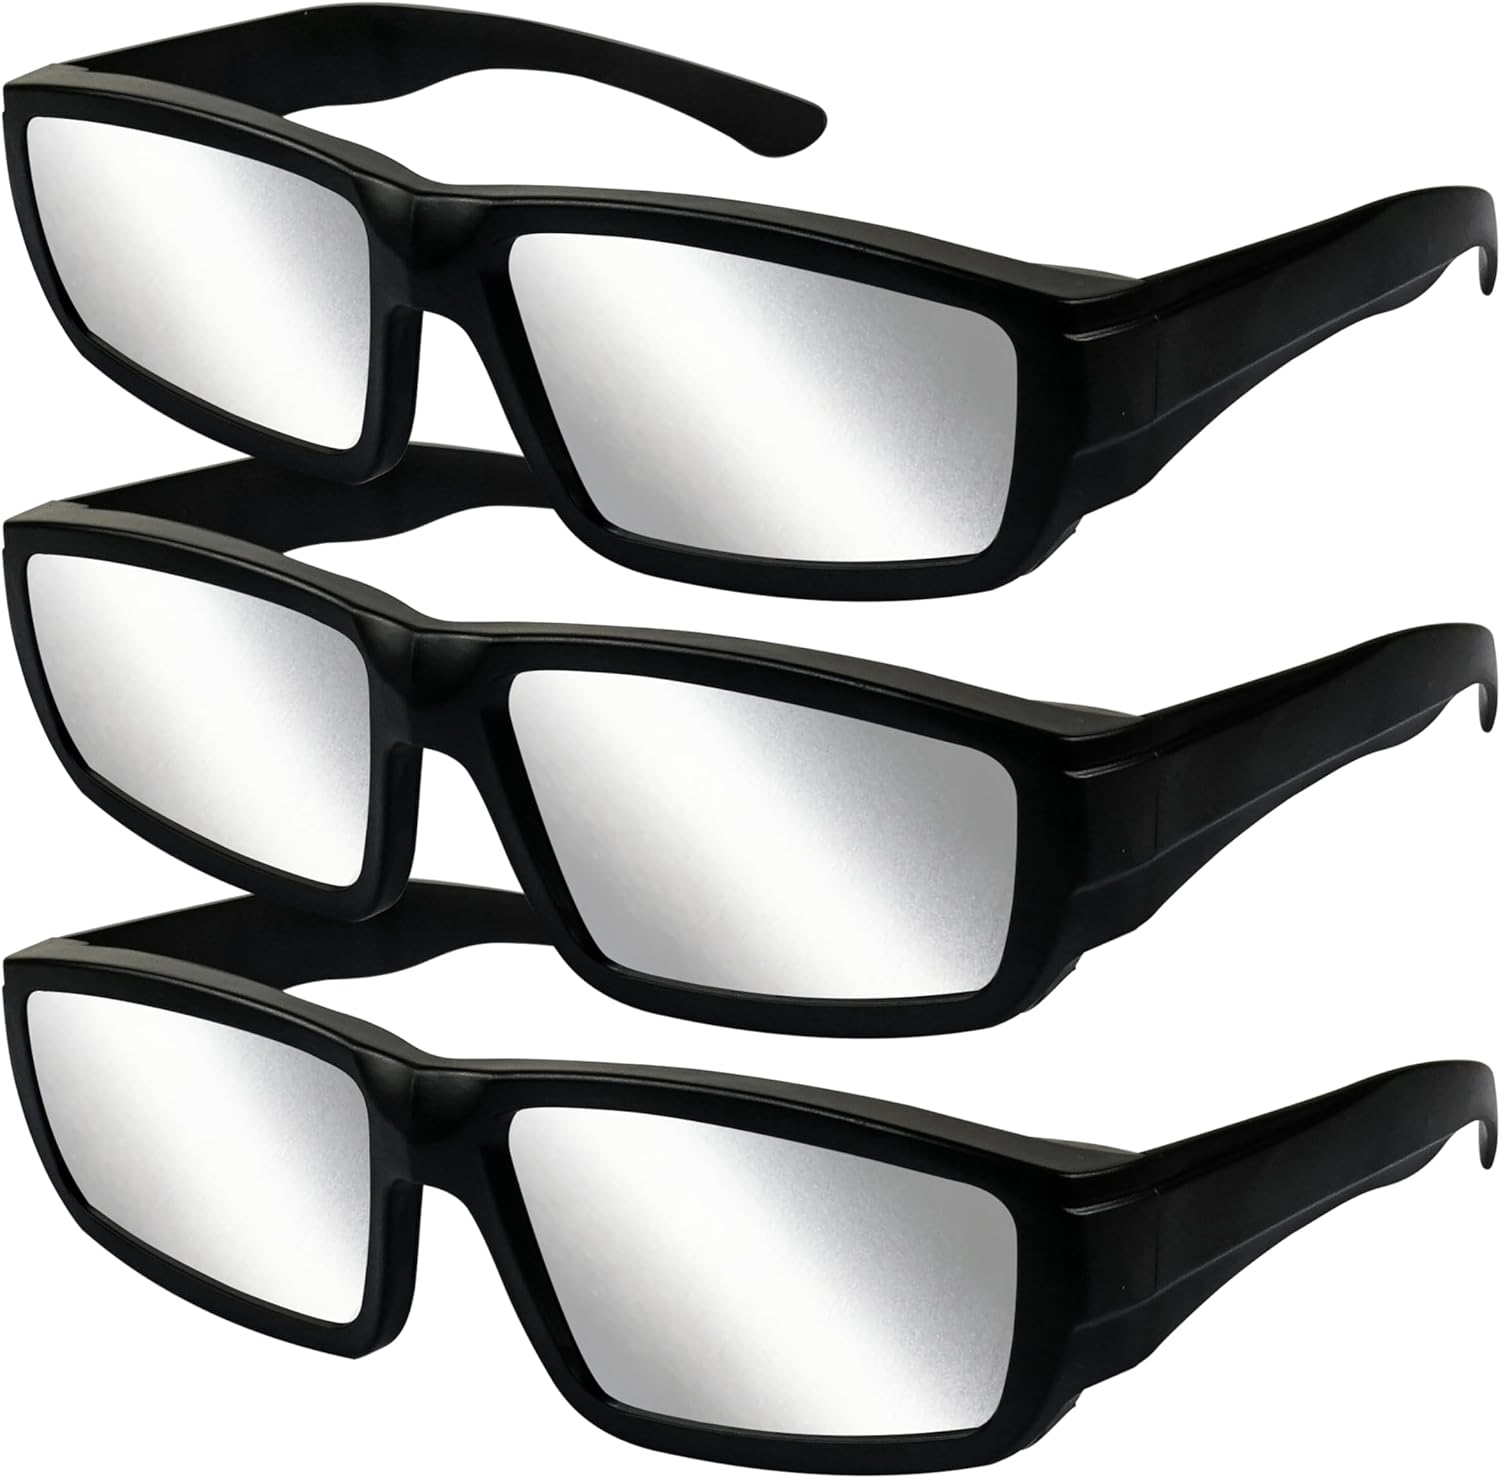 OILKAS Professional Solar Eclipse Glasses - Durable Plastic - Eclipse Glasses for Direct Sun Viewing